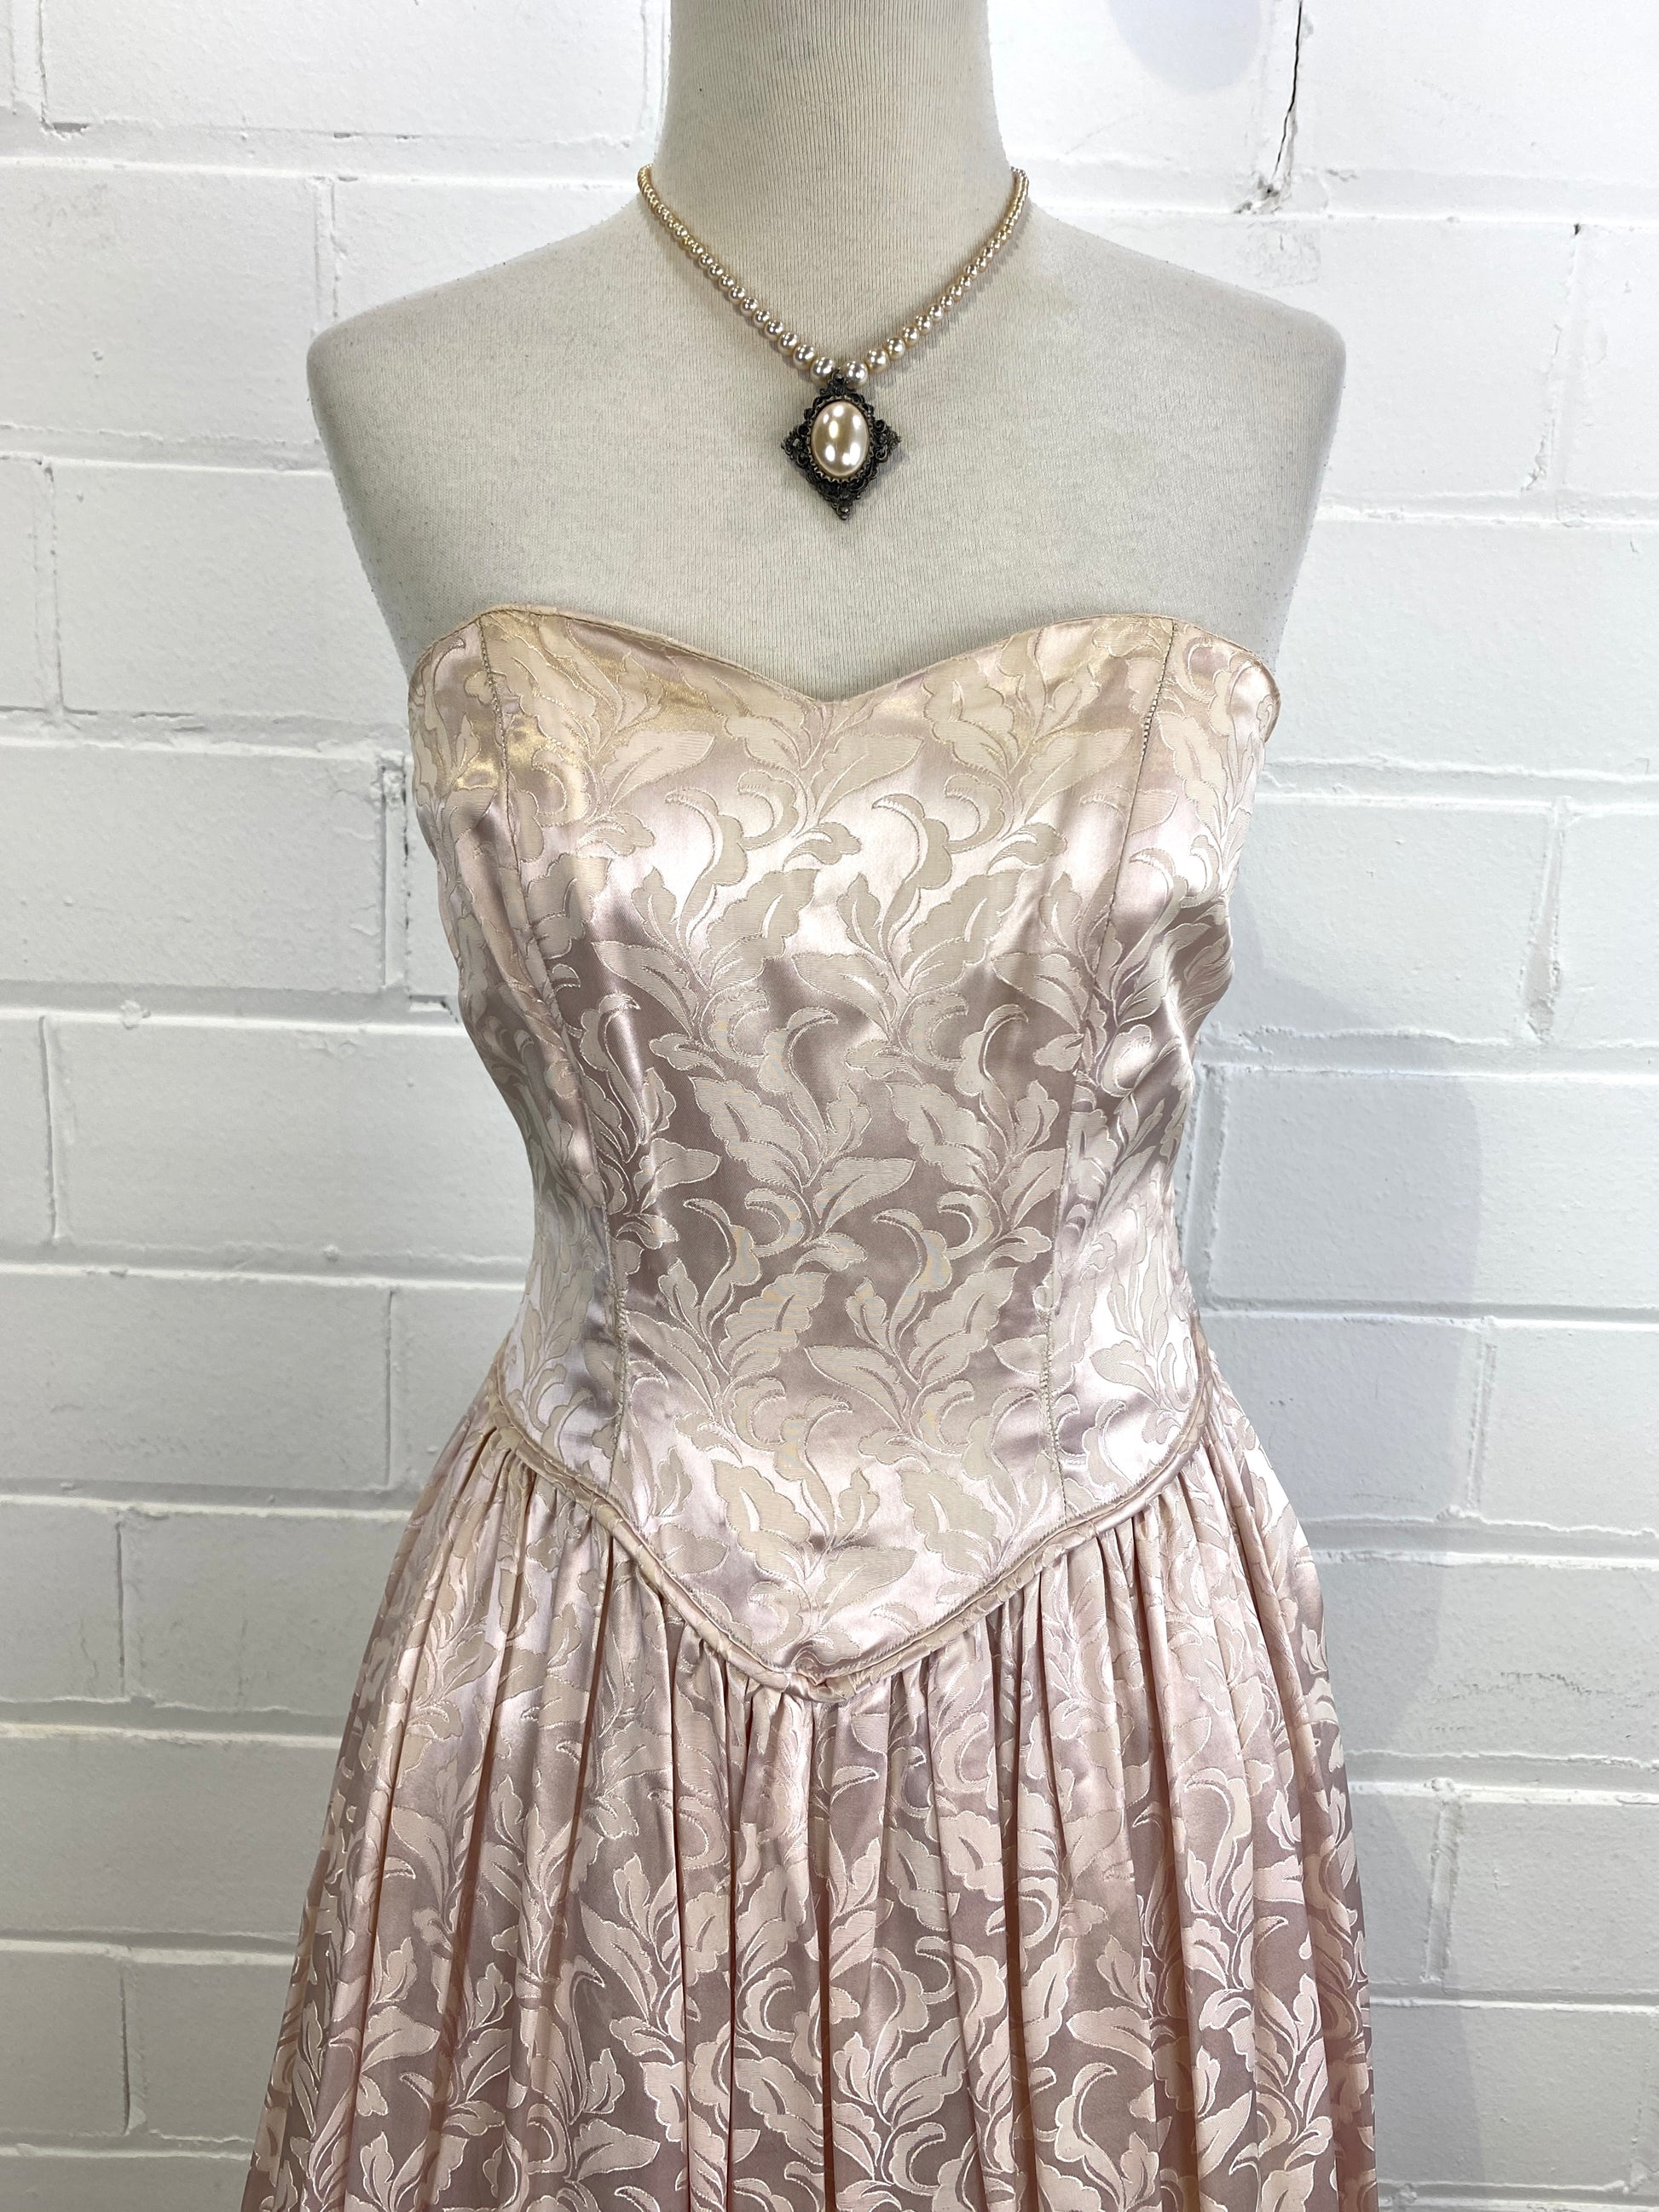 Vintage Gothic Brocade 1950s Corset Dress With Floor Length Skirt